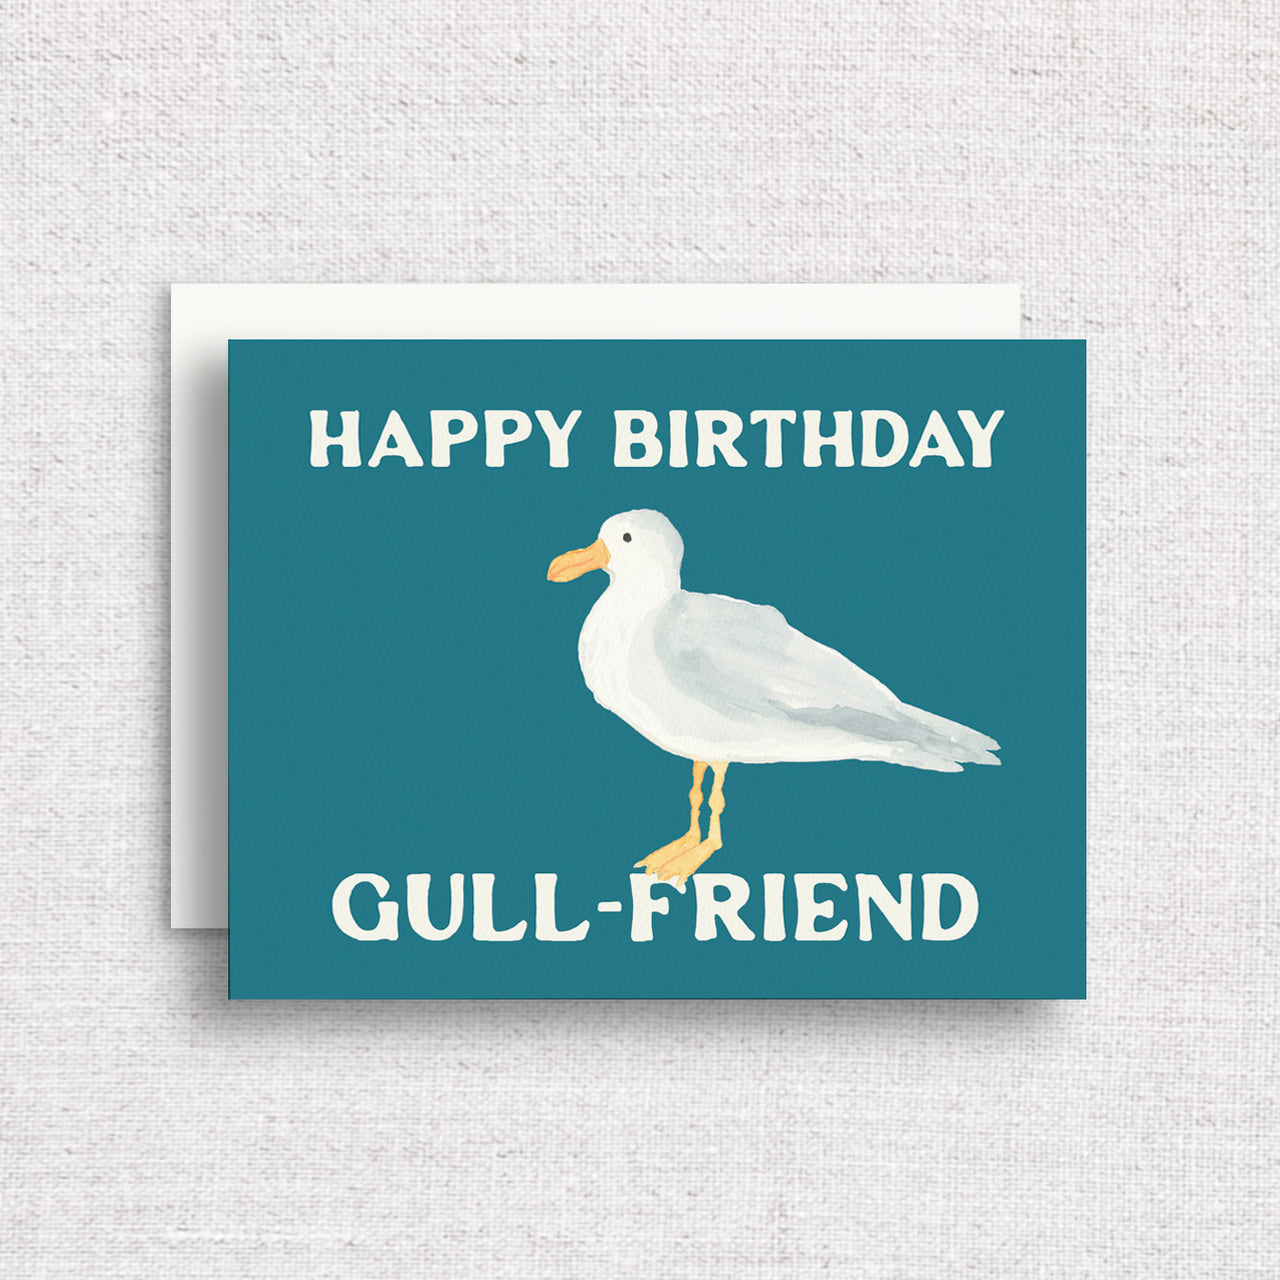 Happy Birthday Gull-Friend Greeting Card Greeting Card by Gert & Co